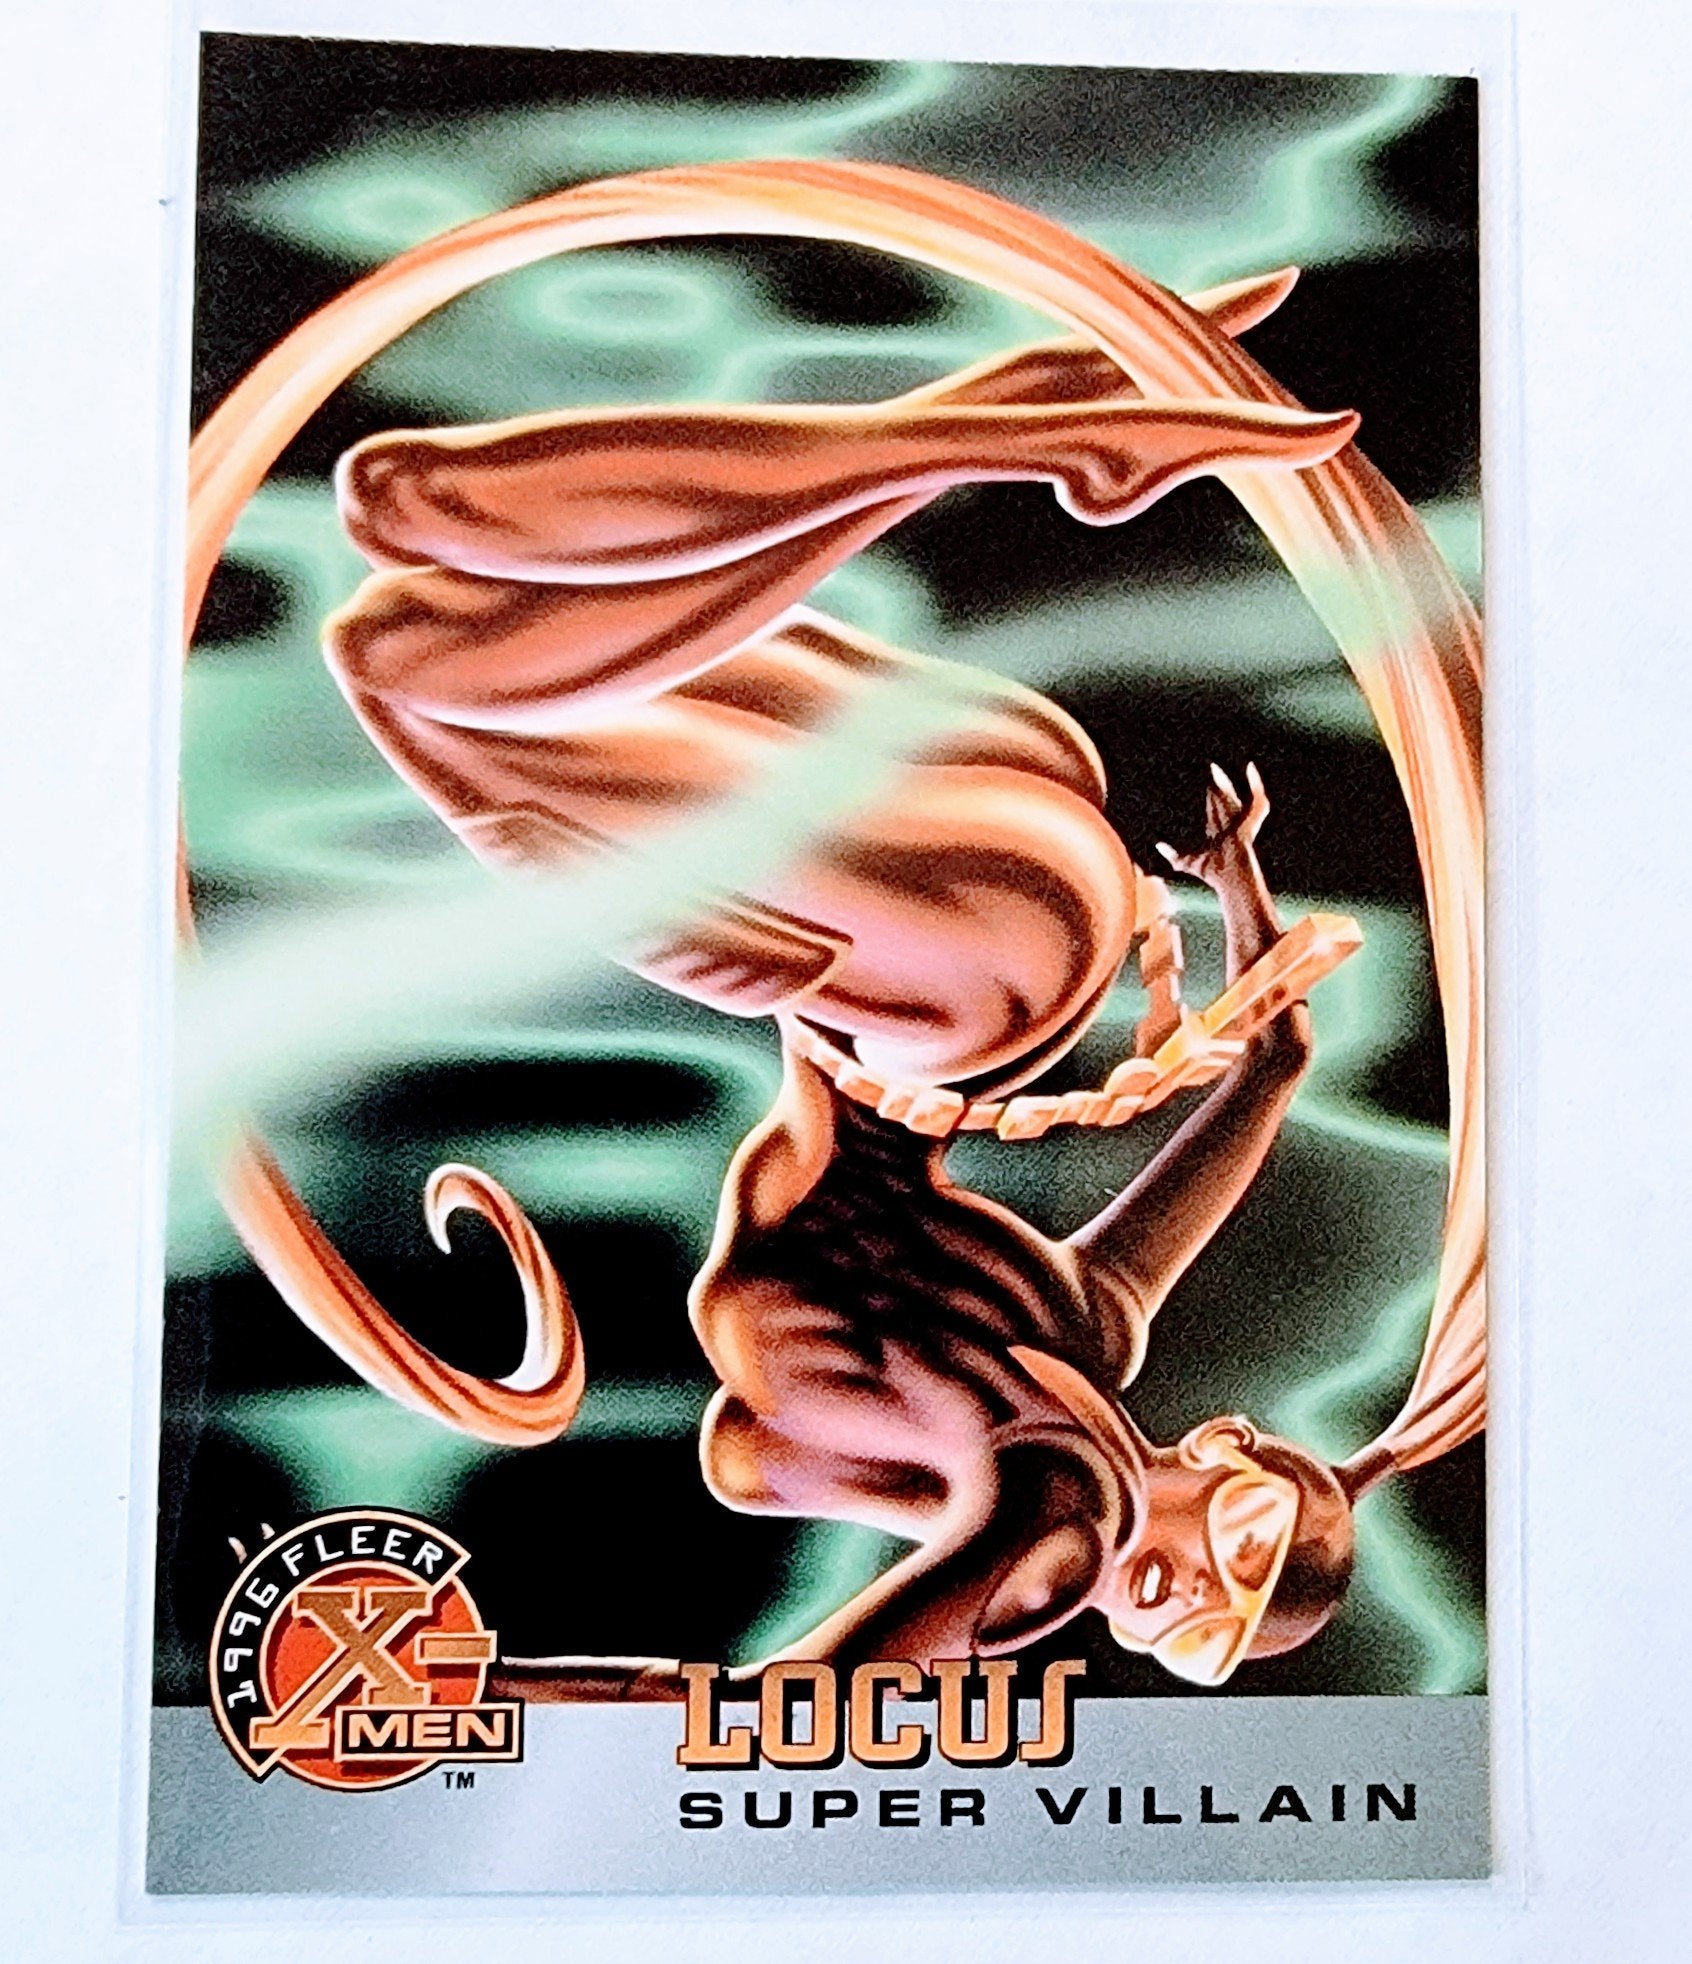 1996 Fleer X-Men Locus Super Villain Marvel Trading Card MCSC1 simple Xclusive Collectibles   